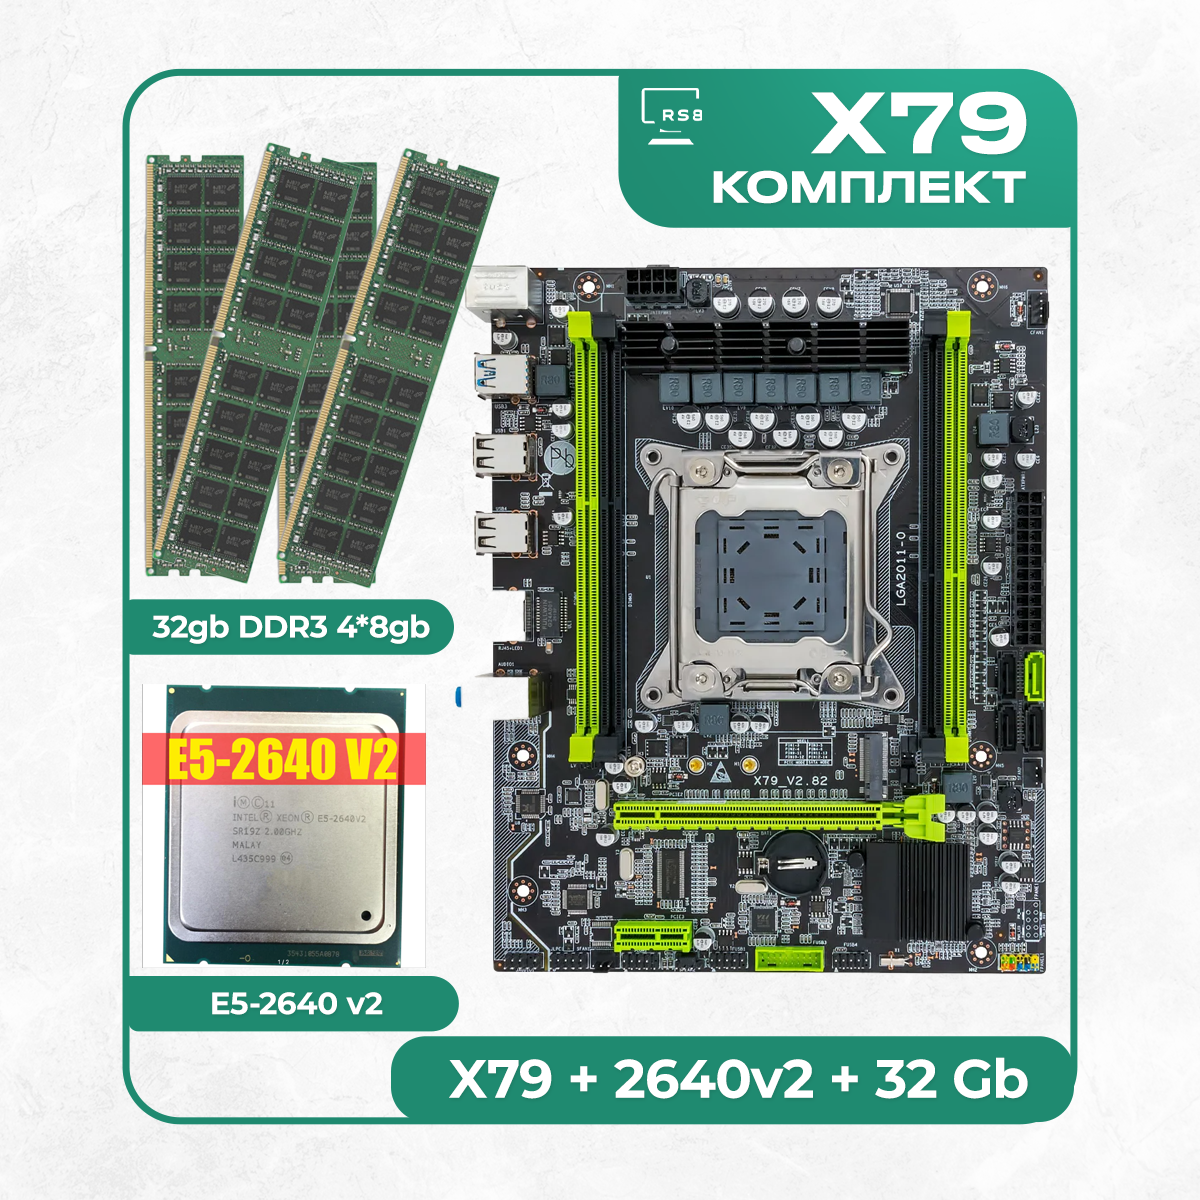 Комплект материнской платы X79 LGA 2011: Atermiter X79 + Xeon E5 2640v2 + DDR3